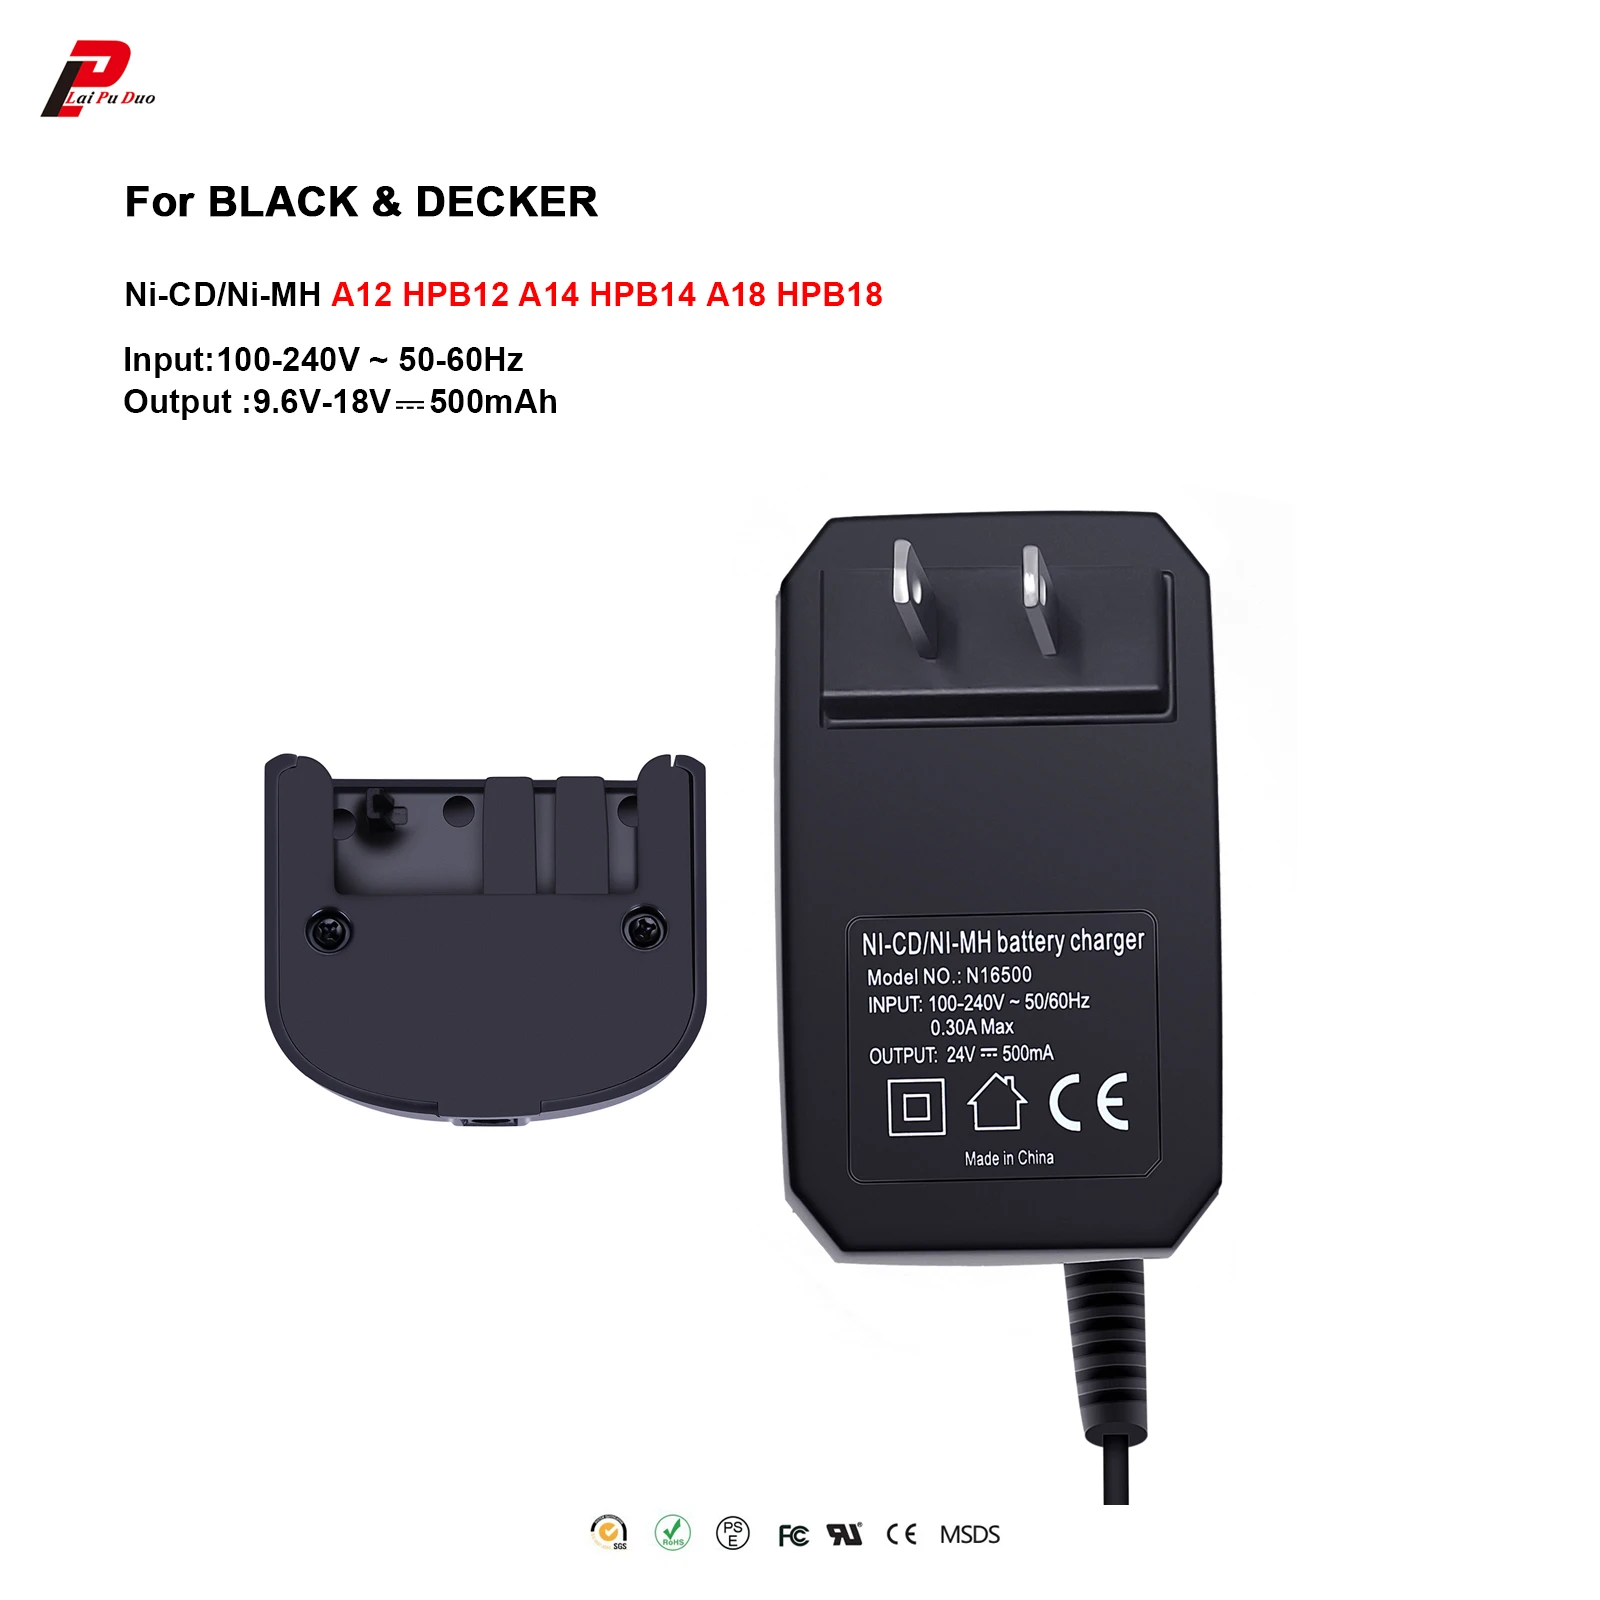 https://ae01.alicdn.com/kf/Sd6ce19d0fa714c38b94d8aead2c21e5c8/9-6V-18V-Battery-Charger-for-Black-Decker-Ni-Cd-Ni-Mh-Battery-Hpb18-Hpb18-Ope.jpg